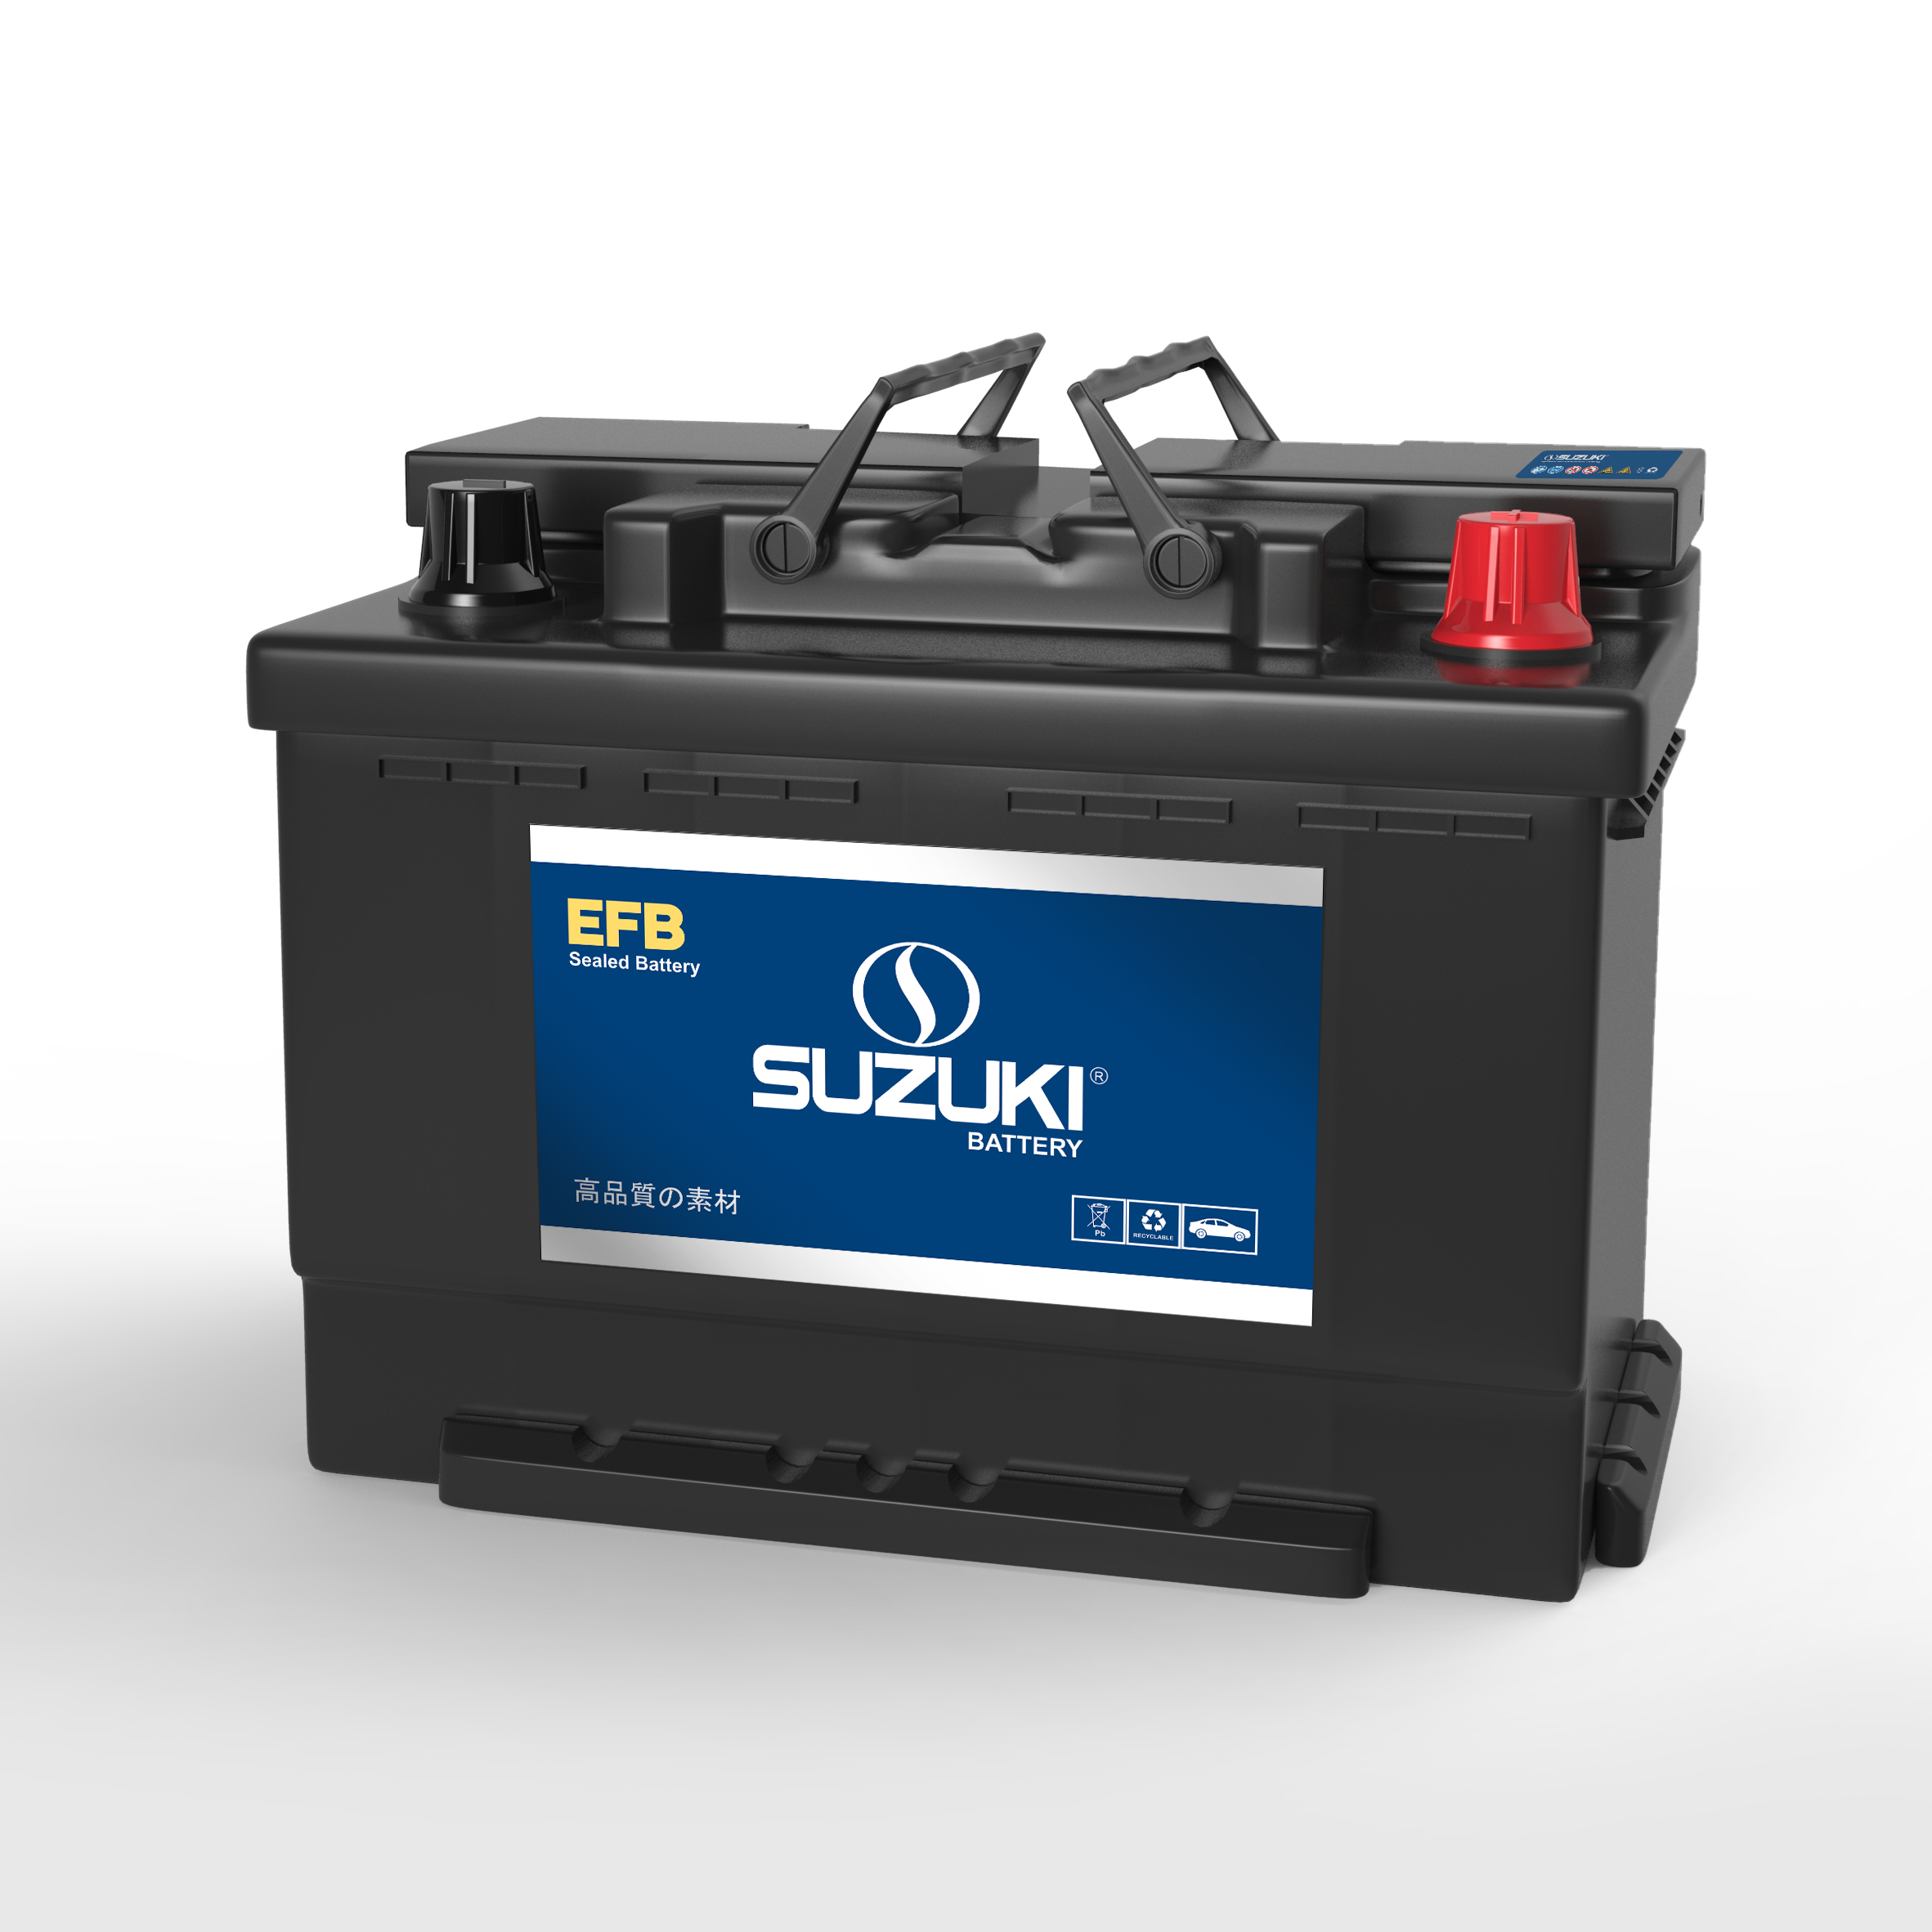 Suzuki EFB Batteries series